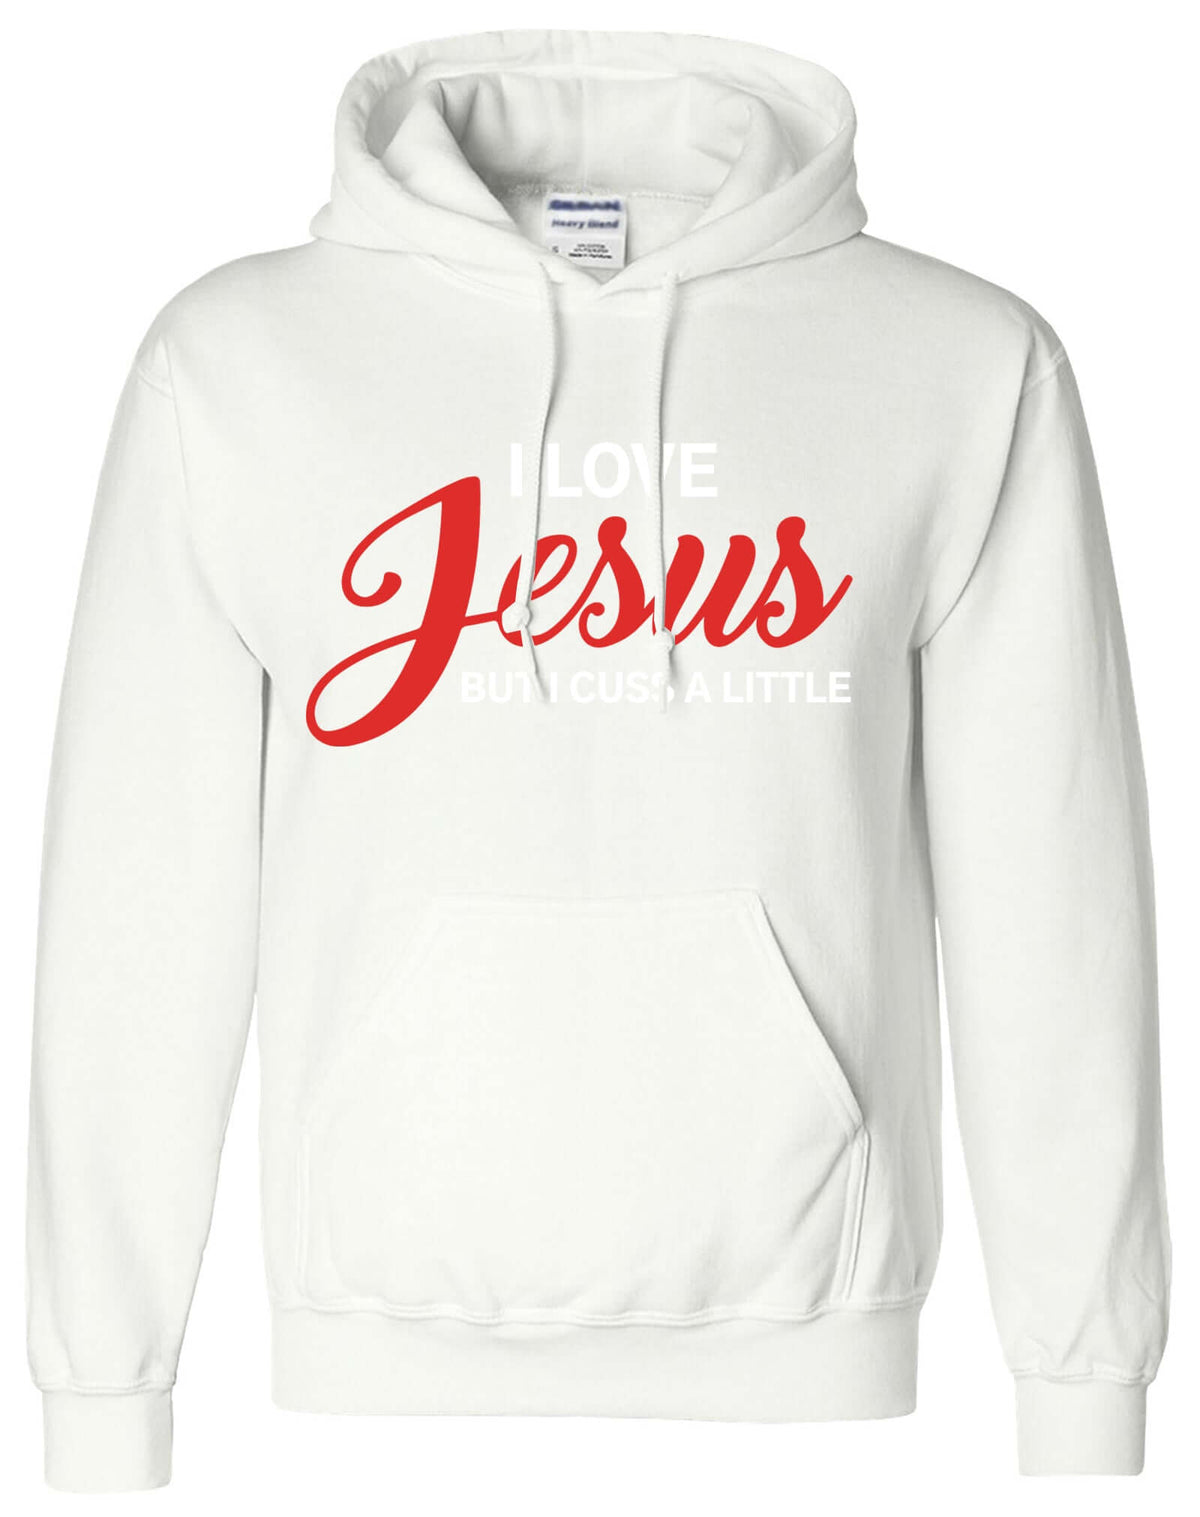 I Love Jesus But I Cuss A Little Hoodie